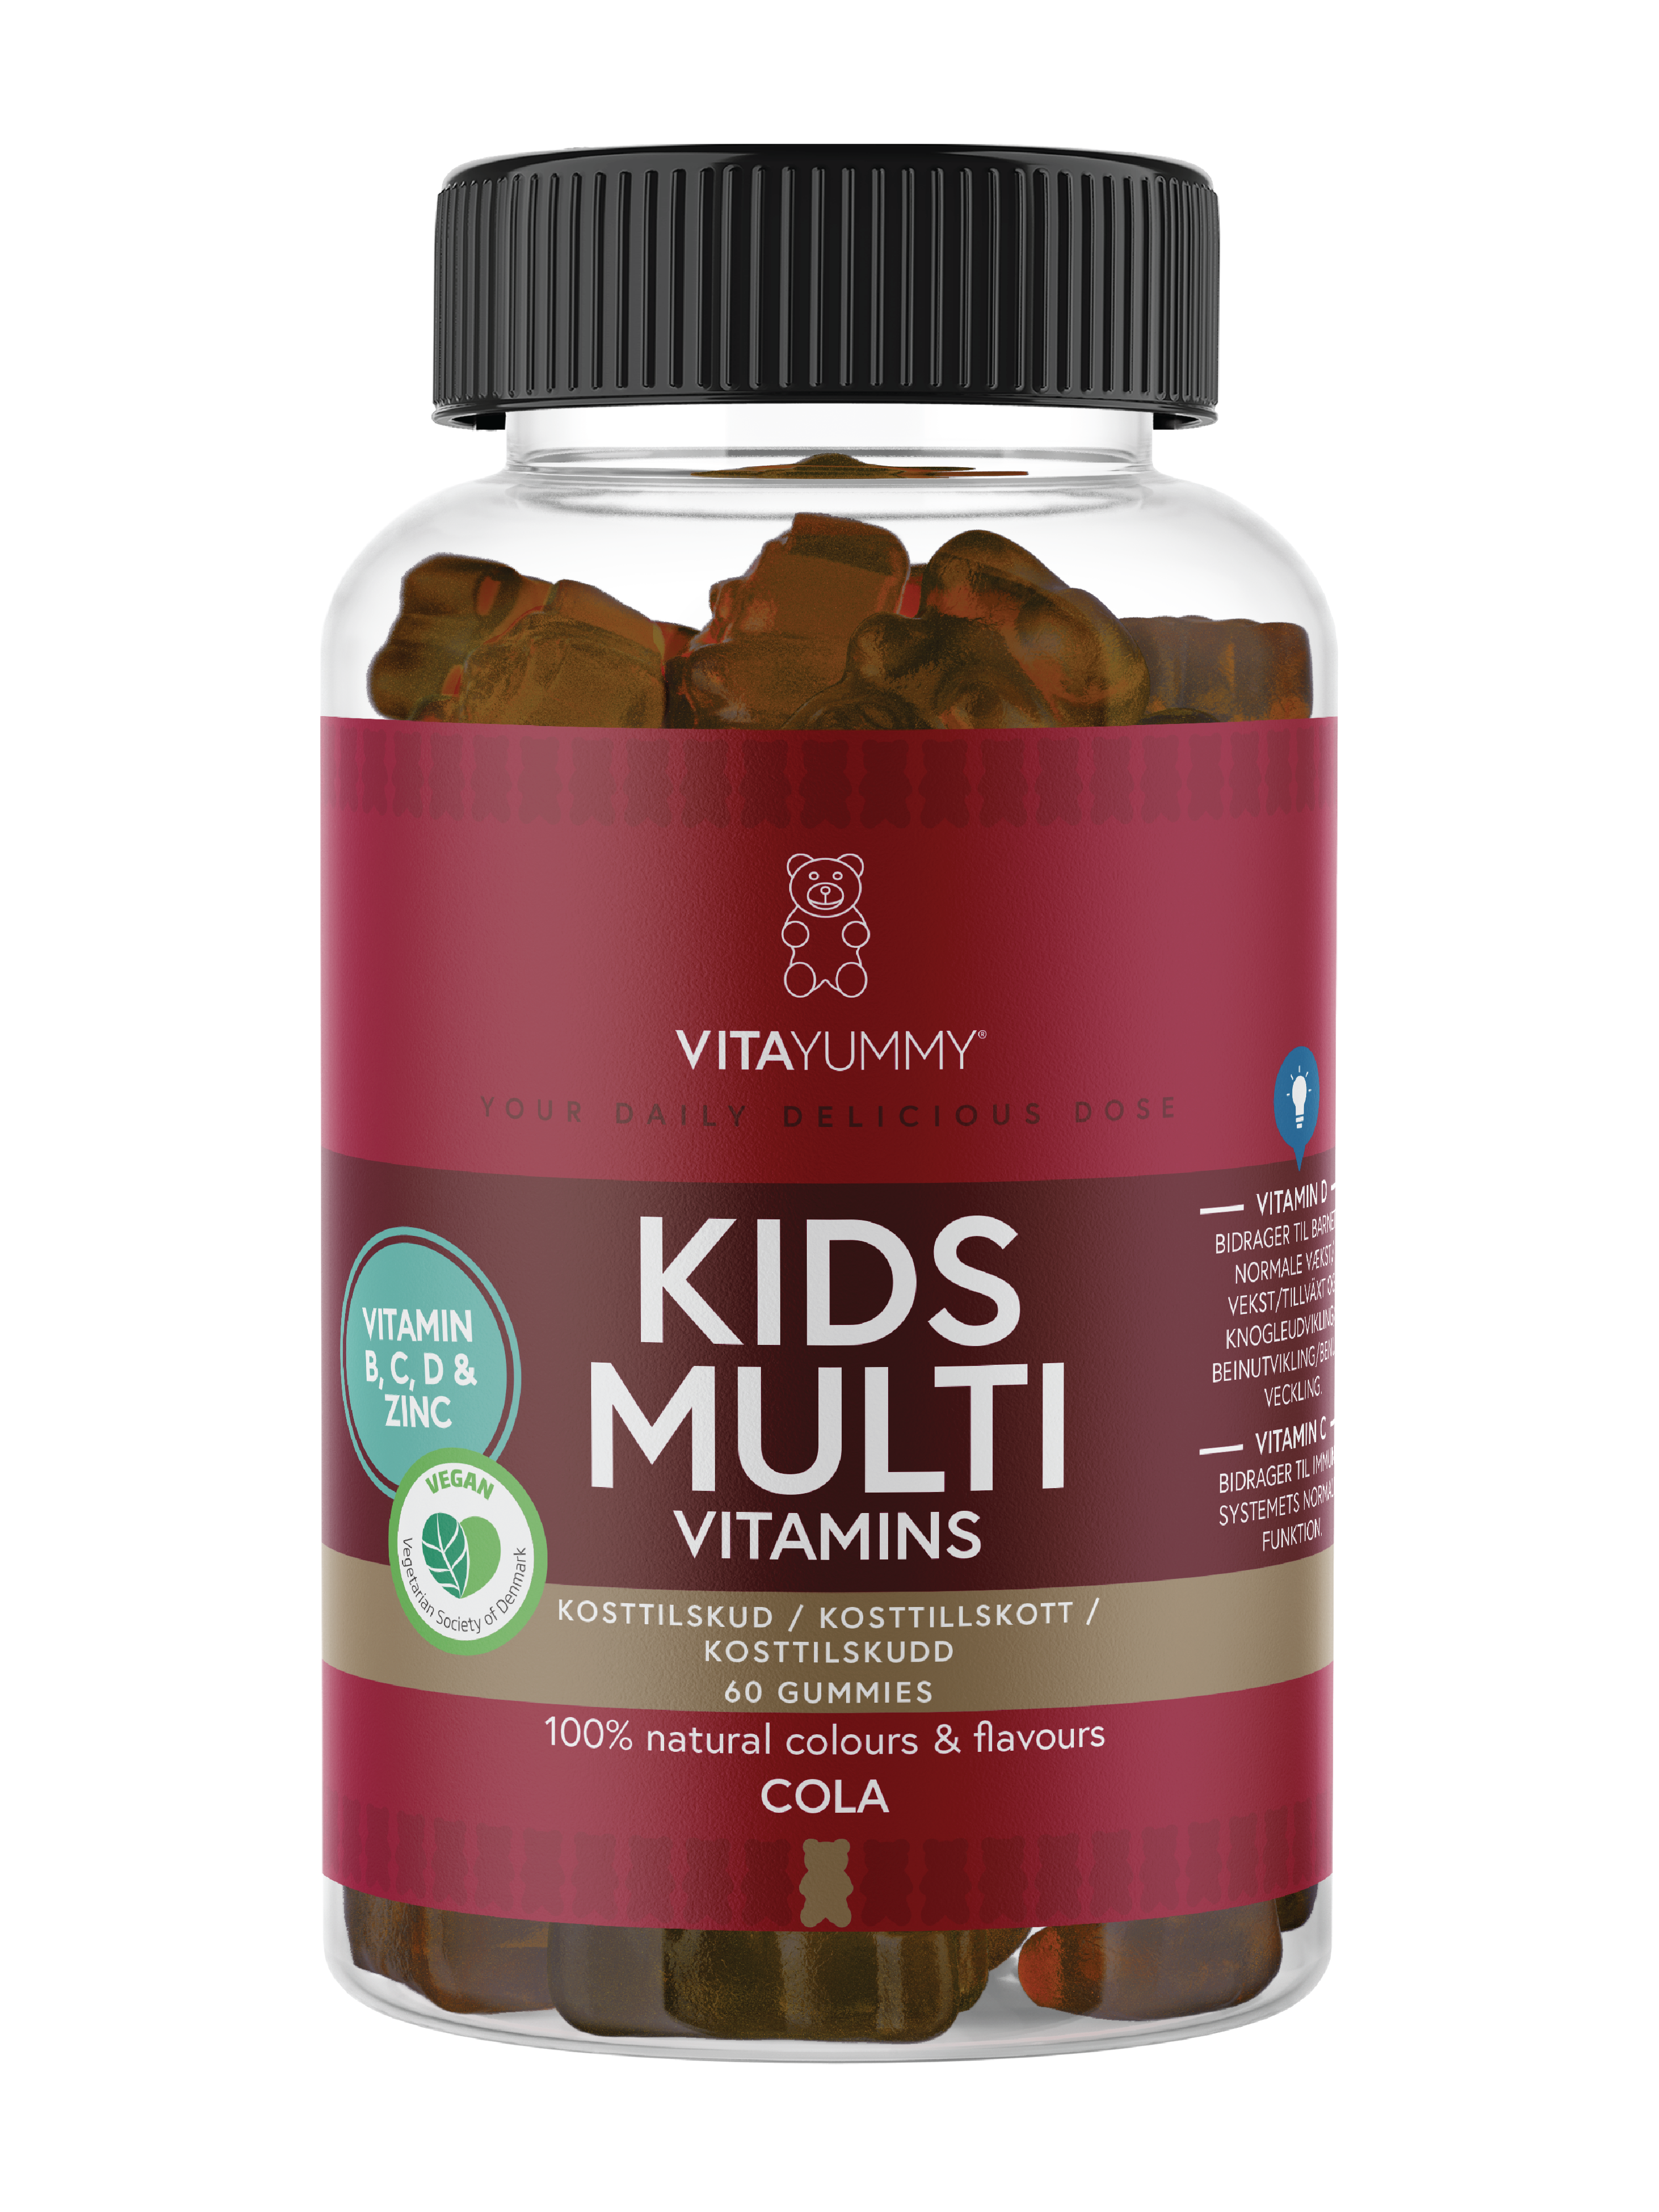 VitaYummy Kids Multi Vitamins, Cola, 60 stk.